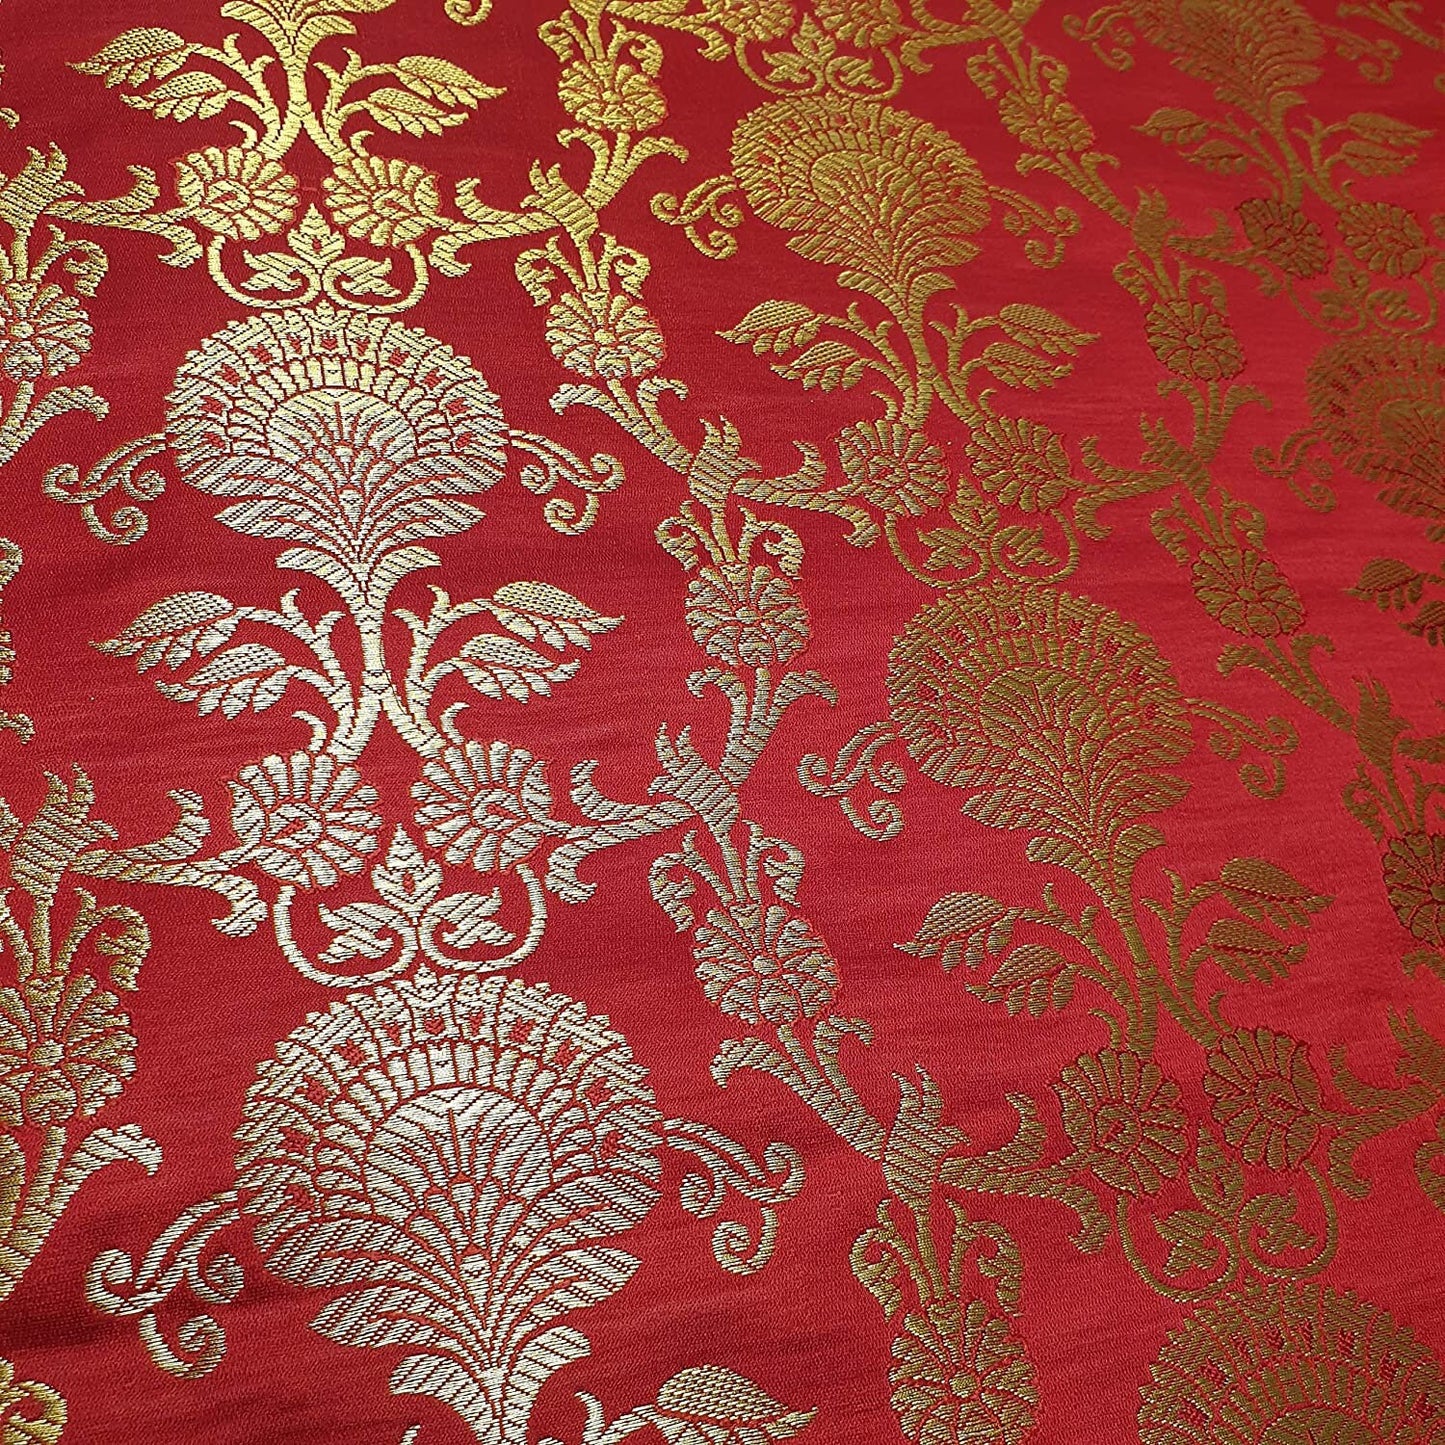 Ornamental Christmas Red Floral Gold Metallic Print Indian Banarasi Brocade Fabric